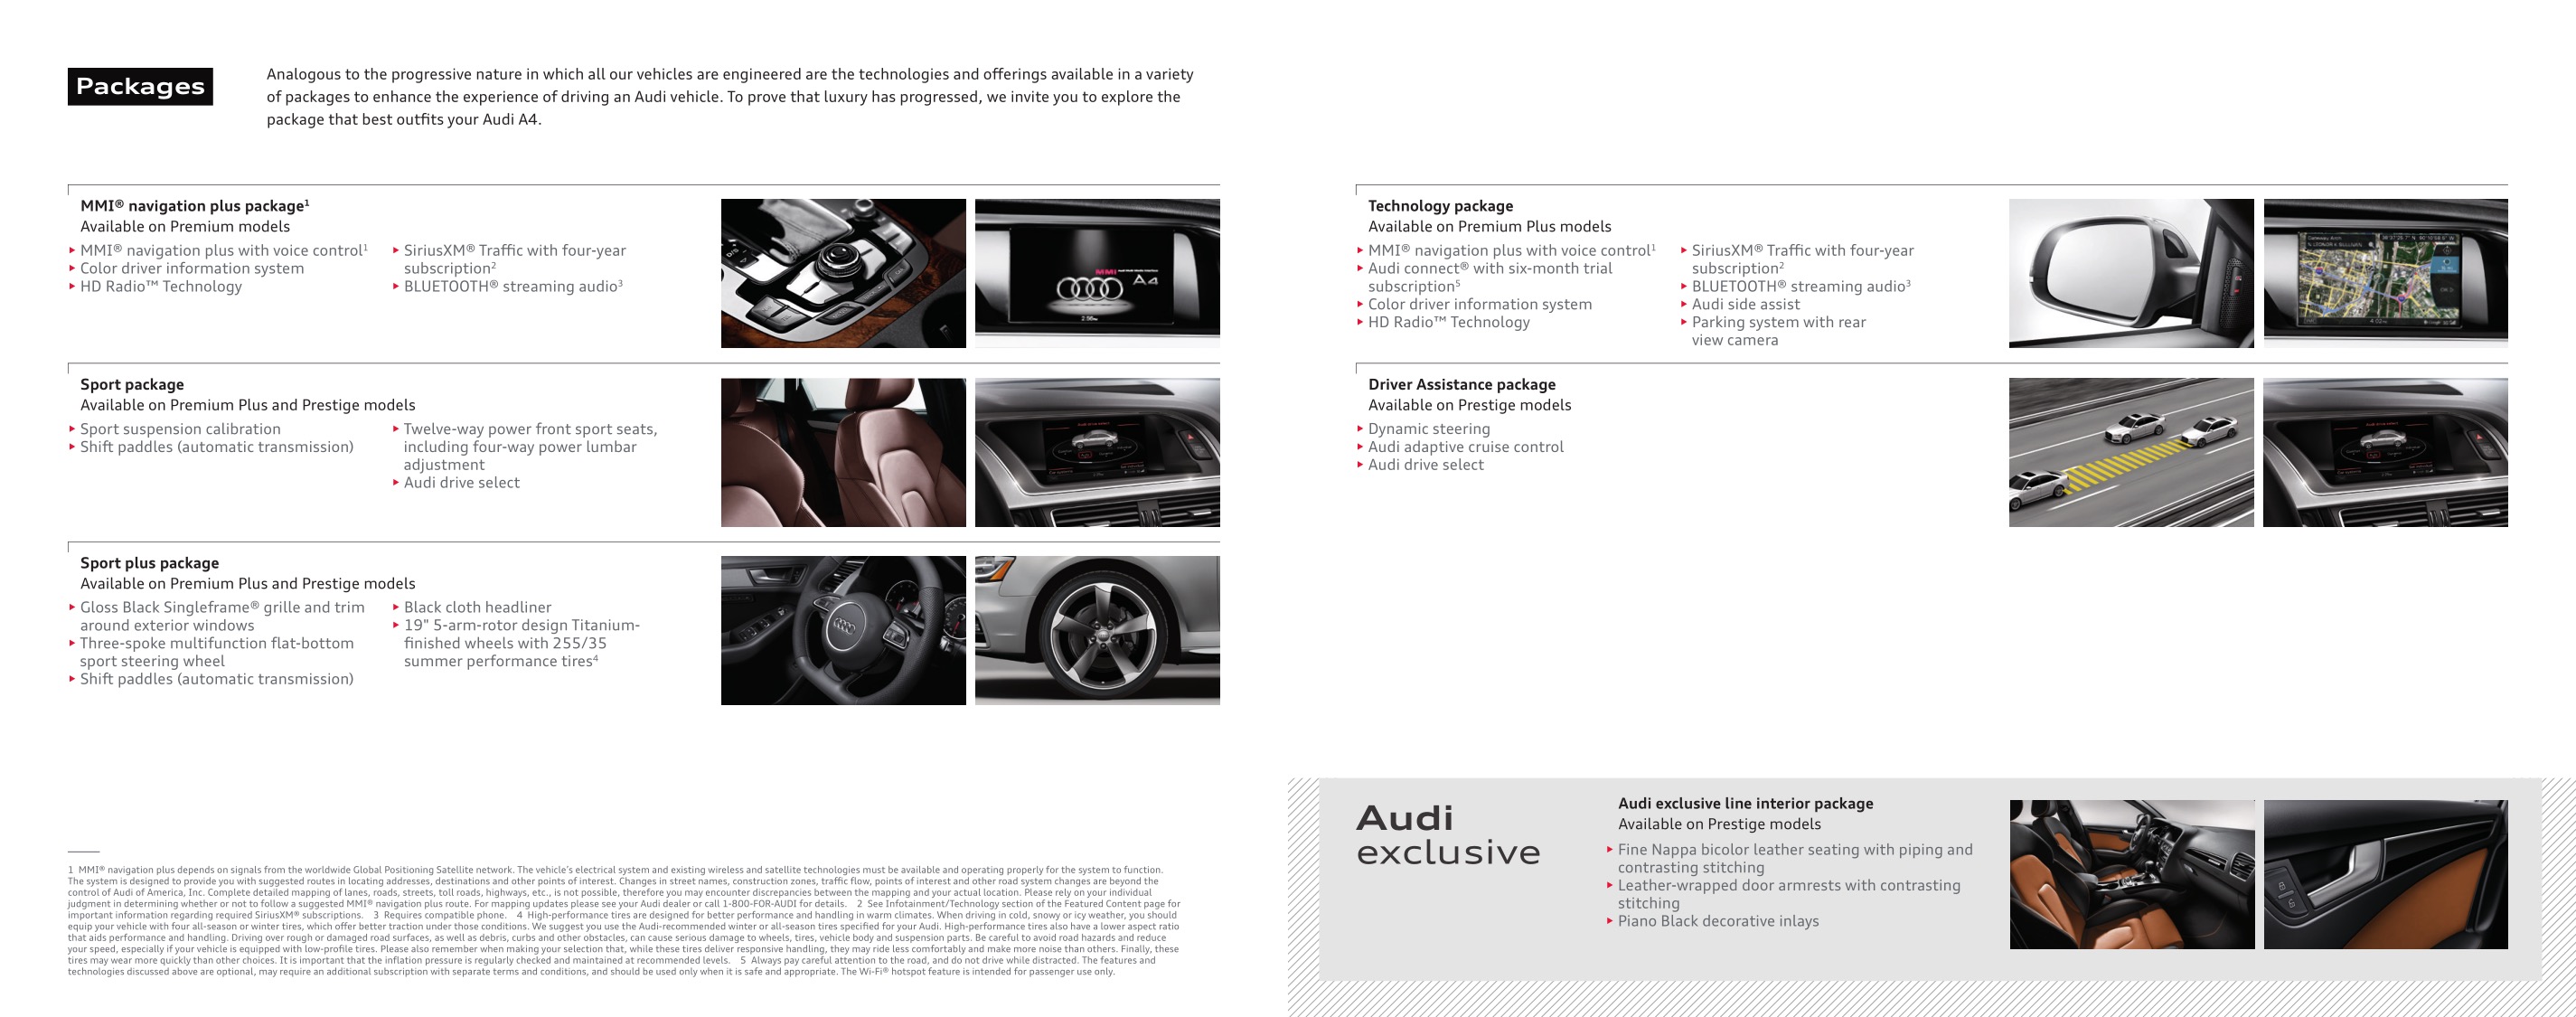 2015 Audi A4 Brochure Page 15